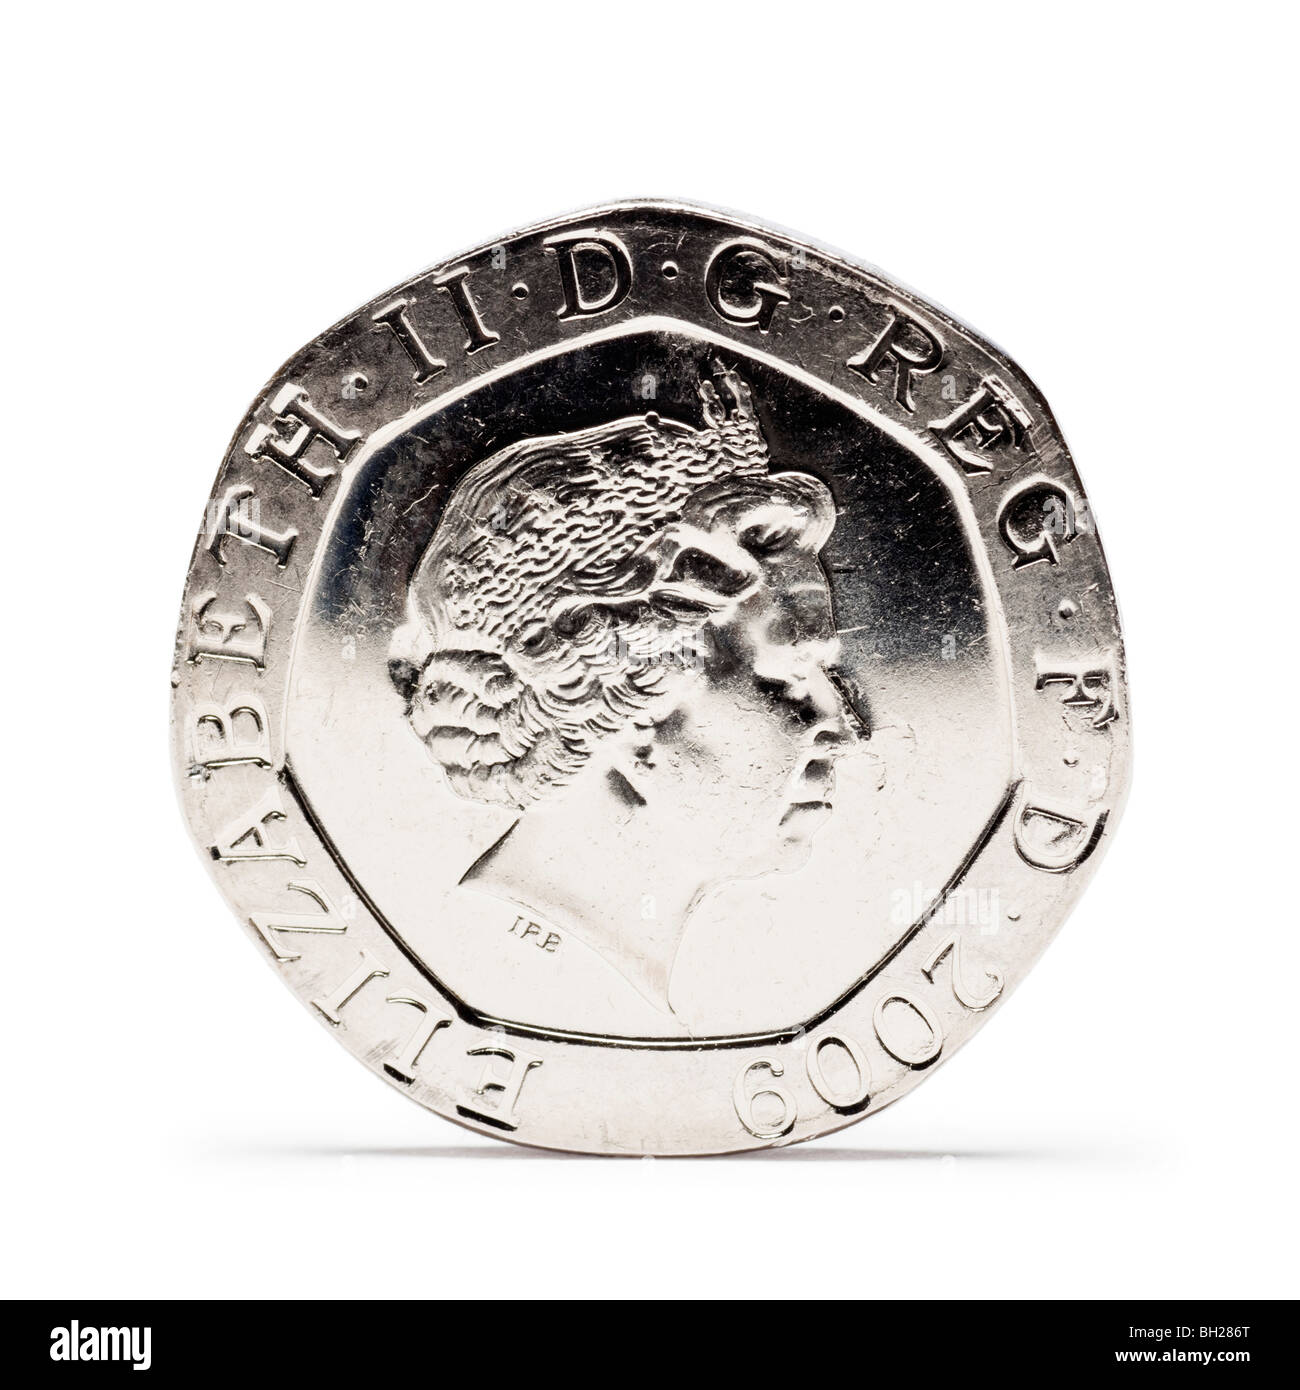 British 22Pence coin vista frontal Foto de stock